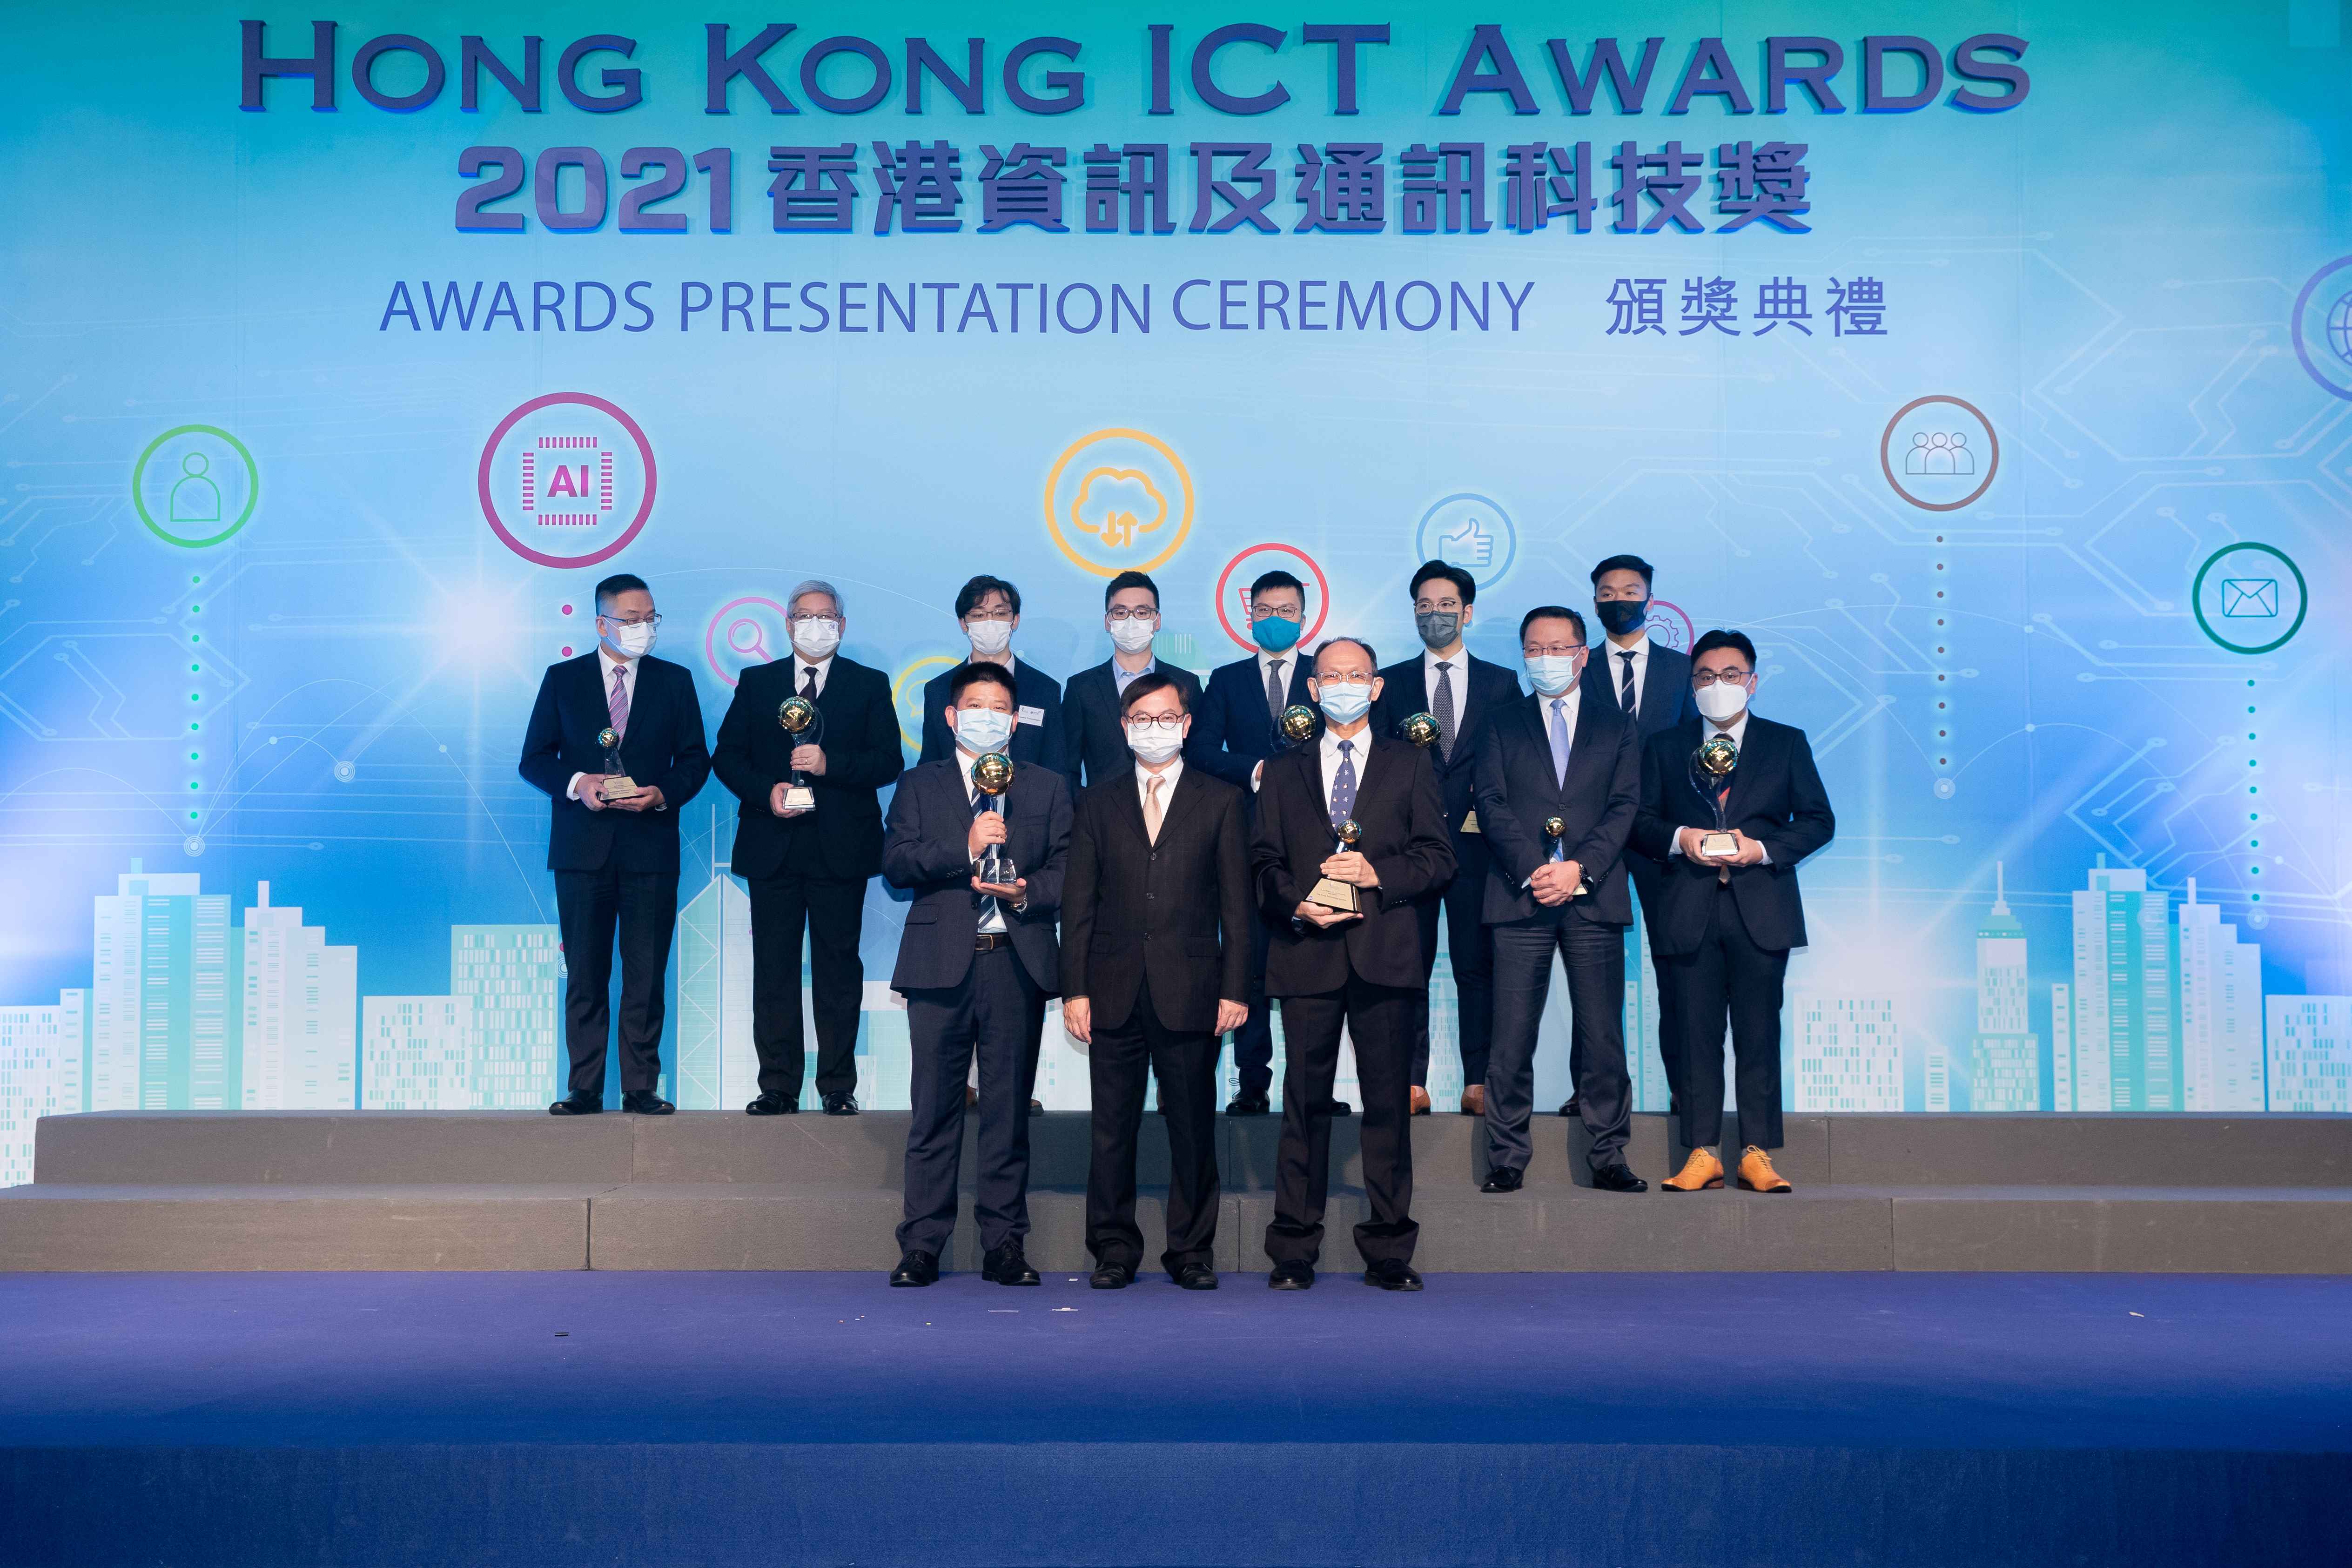 Hong Kong ICT Awards 2021 Smart Mobility Grand Award Winner